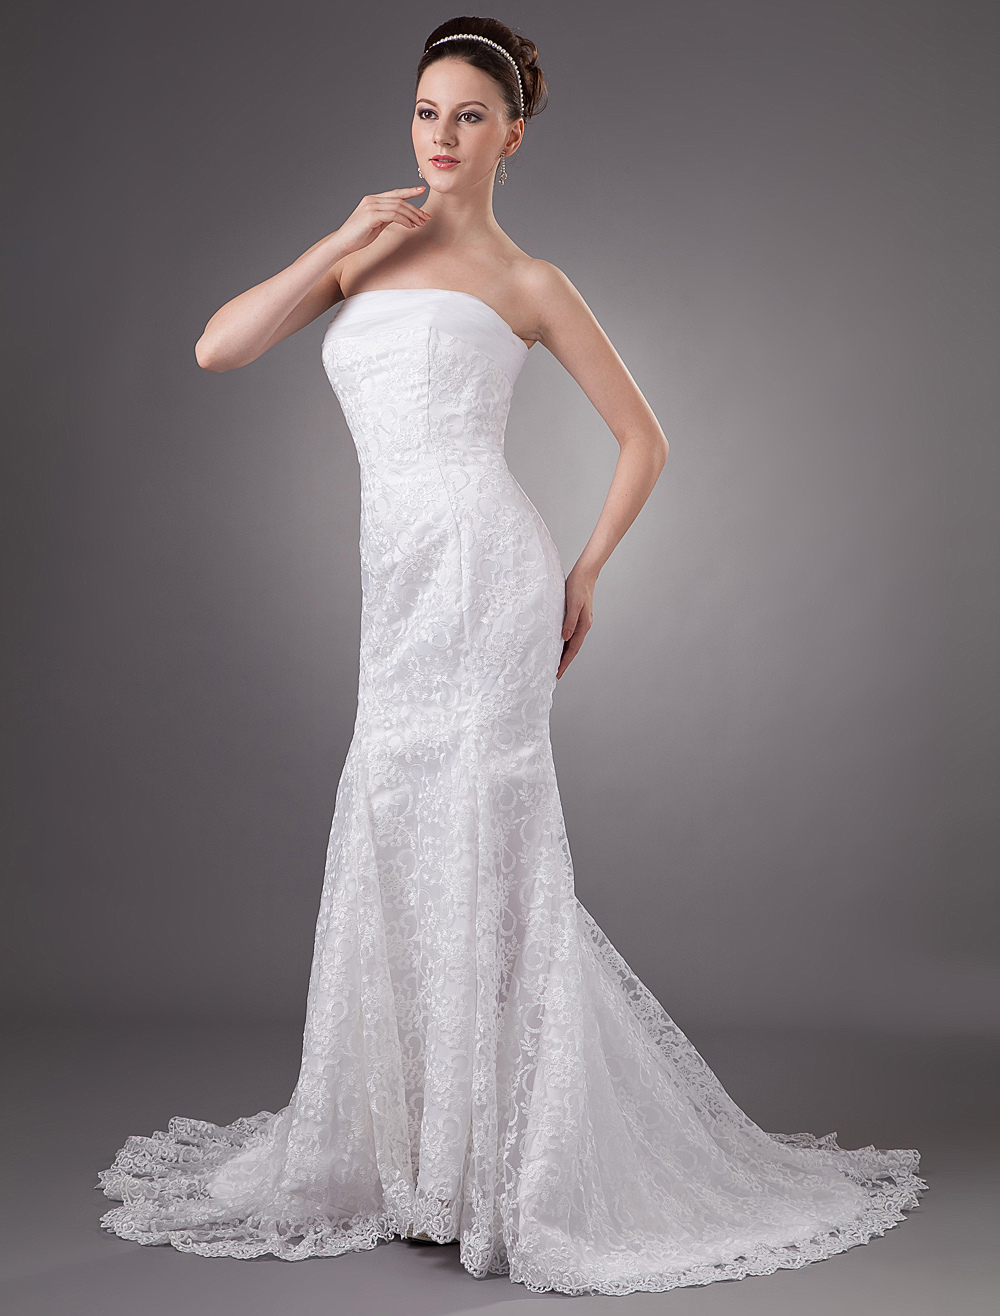 White Lace Beautiful Strapless Mermaid Trumpet Wedding Dress - Milanoo.com